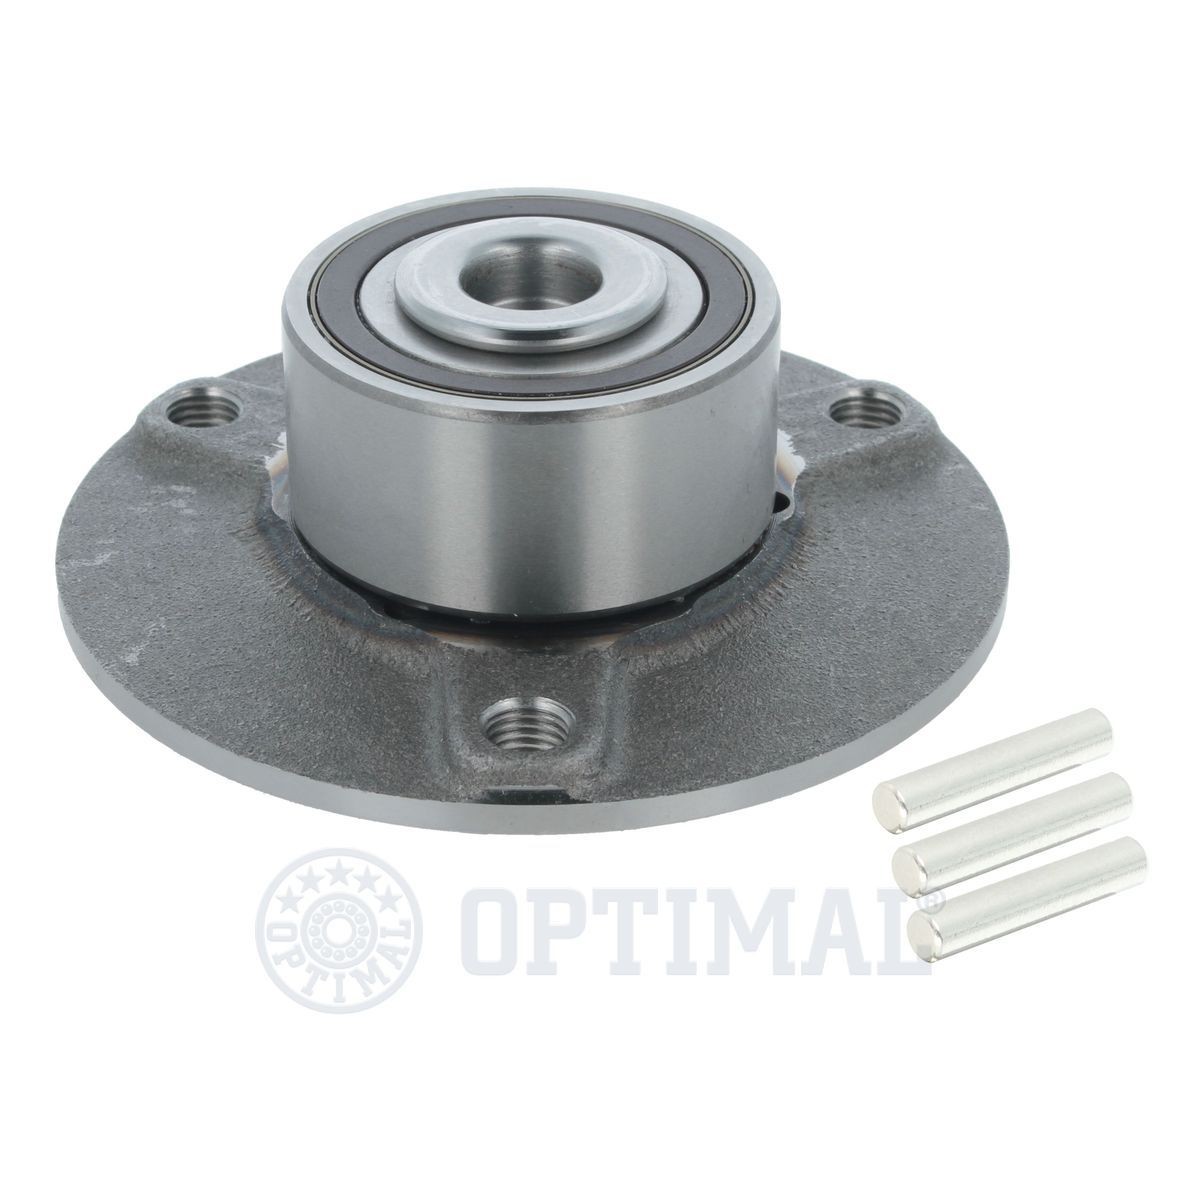 OPTIMAL 401133 Wheel bearing kit with integrated magnetic sensor ring, 134, 68 mm